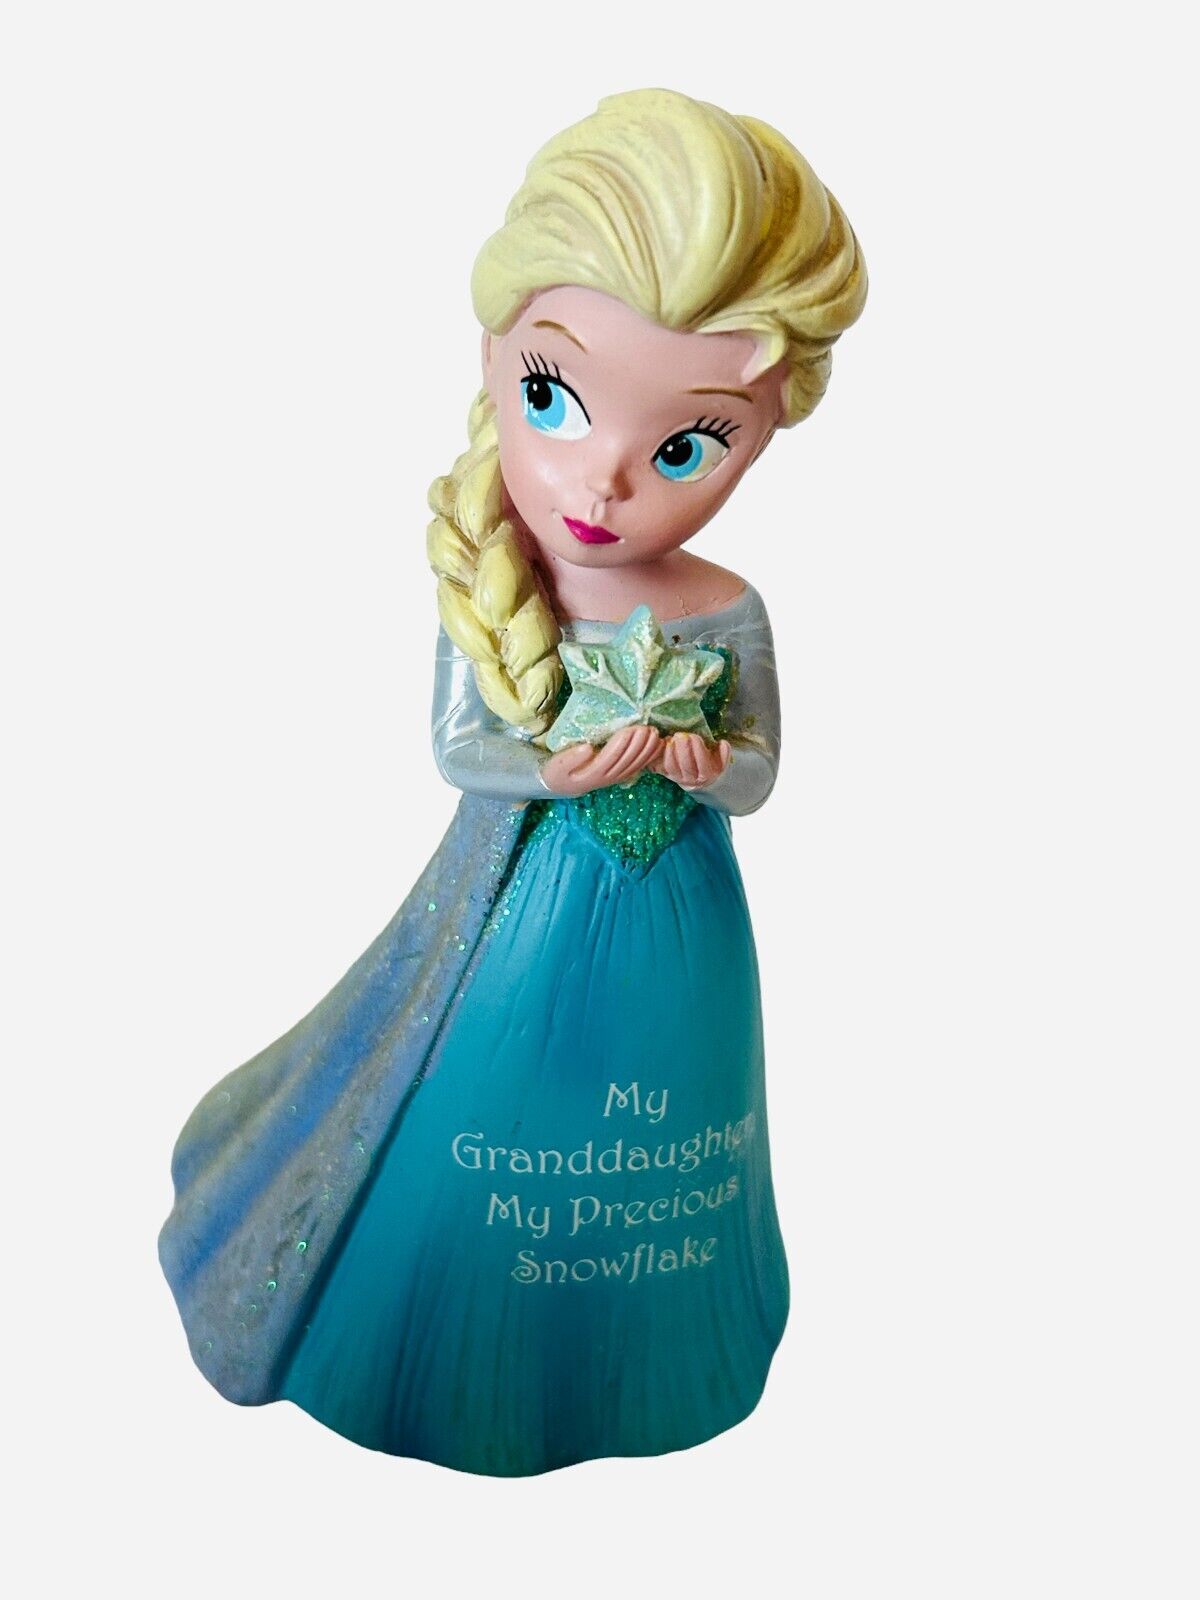 Disney Princes Frozen Elsa Hamilton Collection My Granddaughter Series Figurine